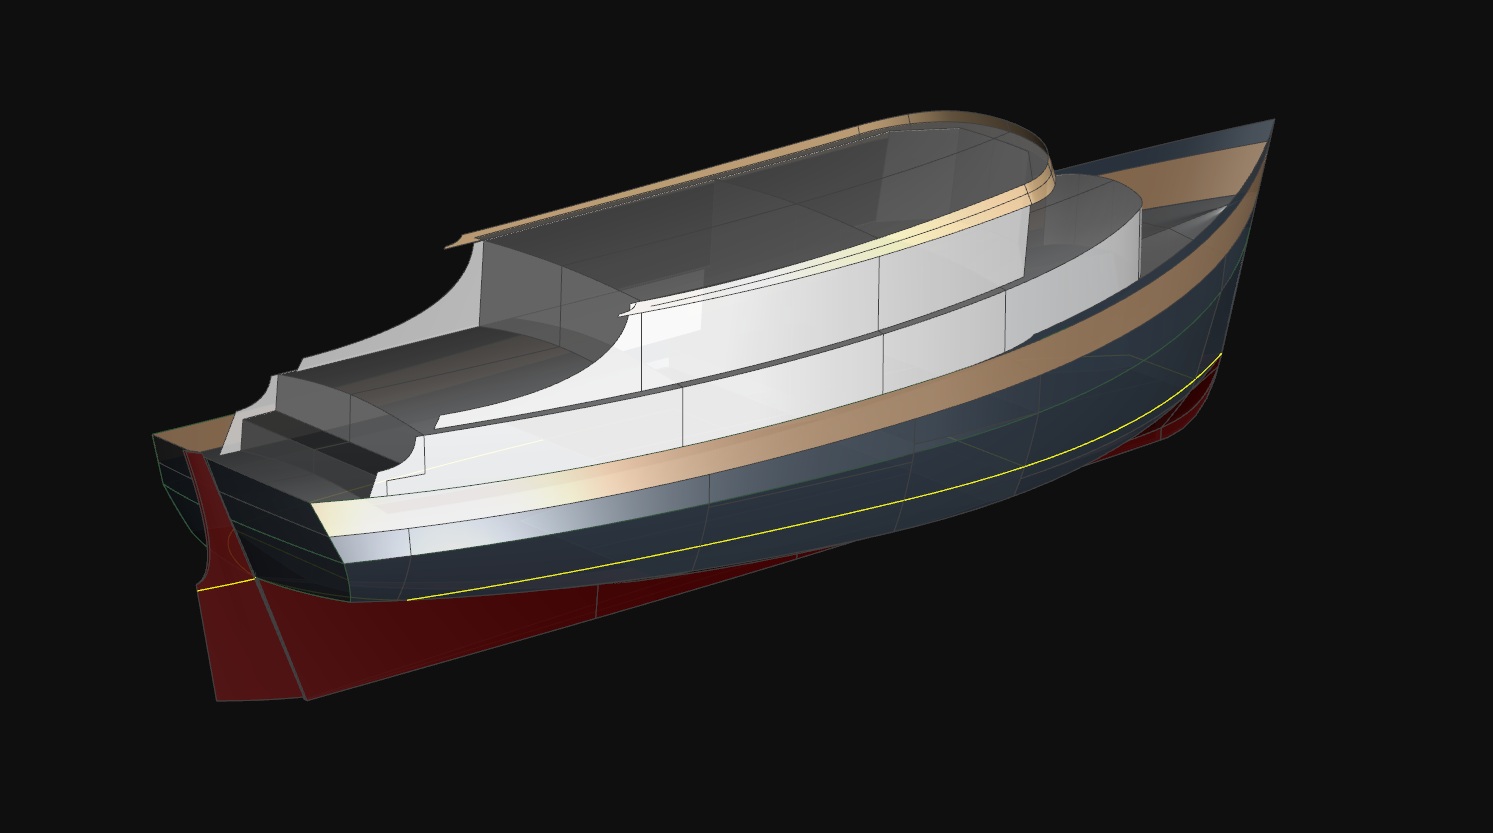 The 49' Trawler Yacht - Black Jack - Kasten Marine Design, Inc.